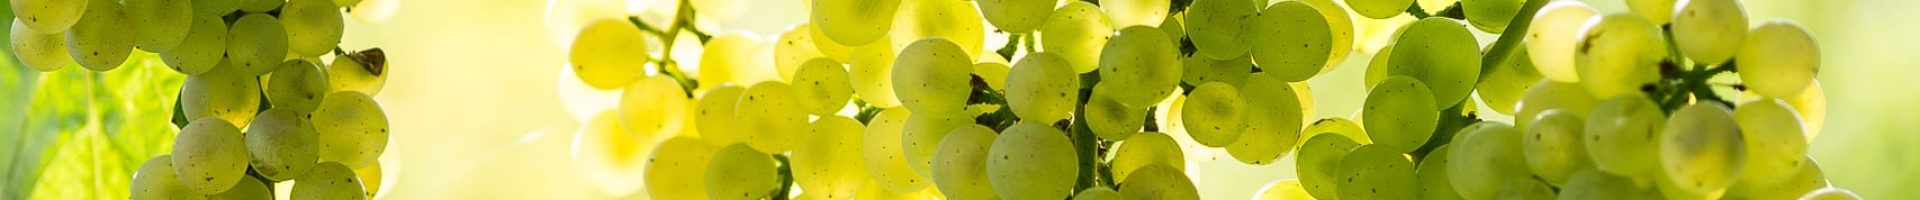 white-grapes-wine-vineyard_214954762